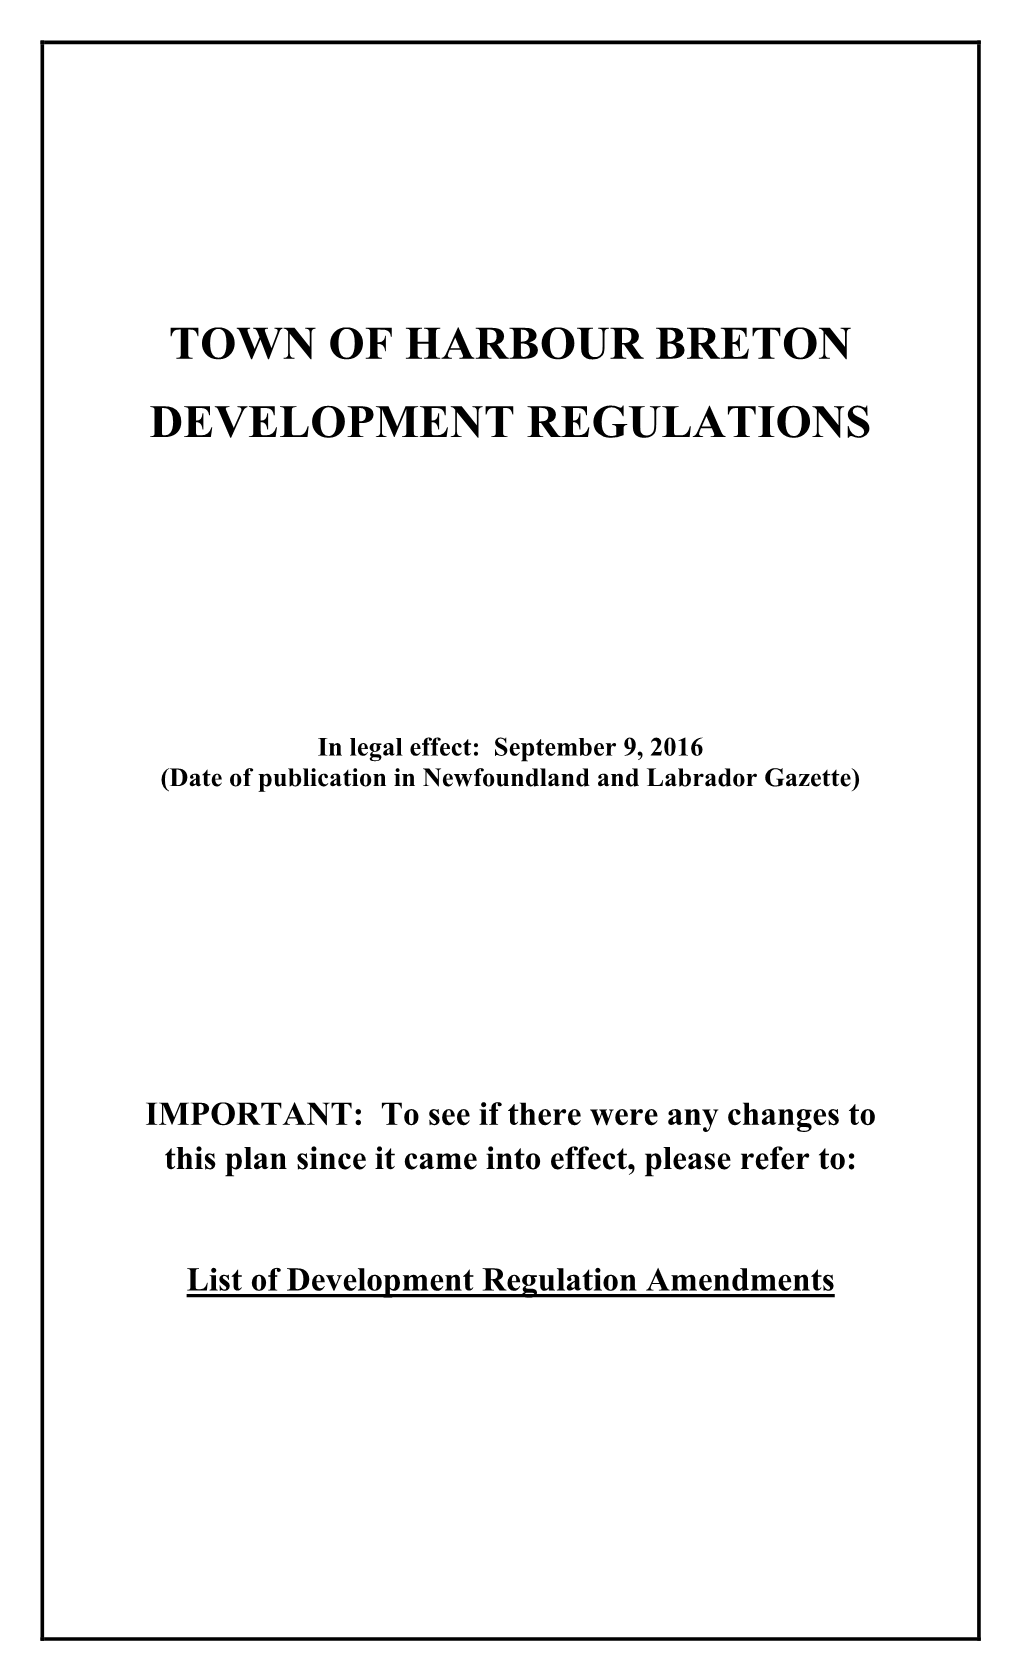 Town of Harbour Breton Development Regulations